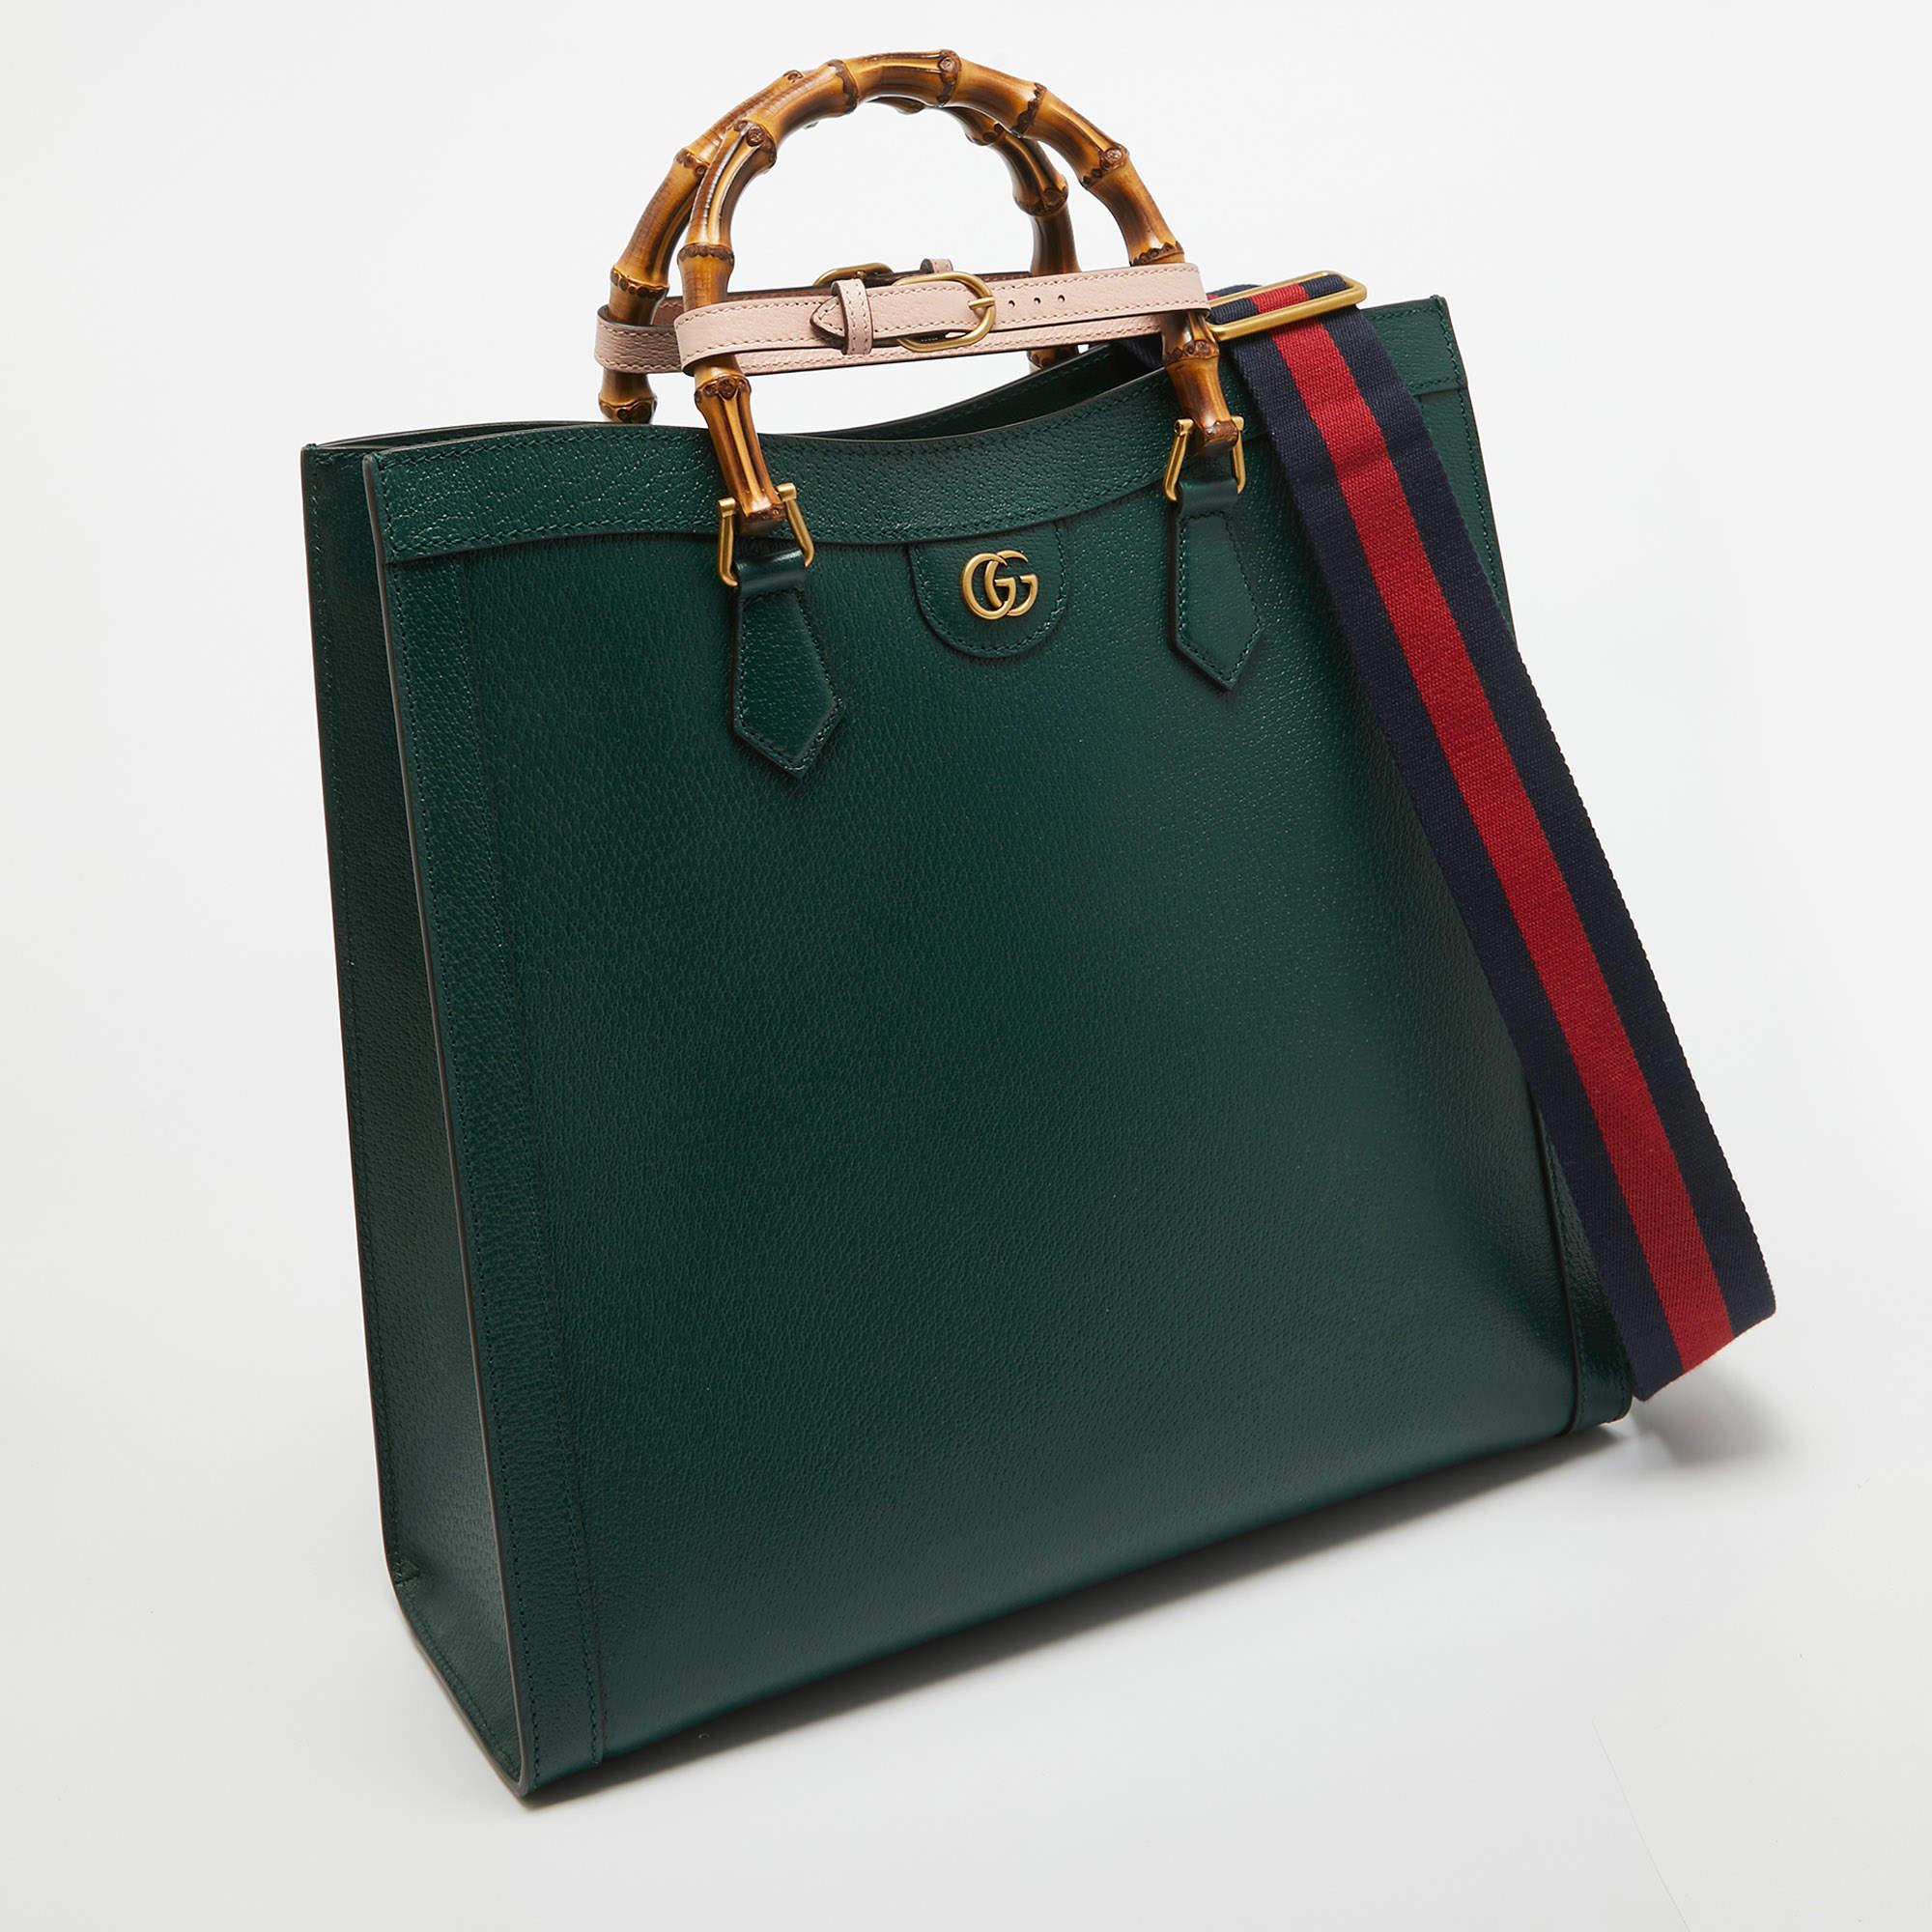 Gucci Green Leather Large Bamboo Diana Tote In New Condition For Sale In Dubai, Al Qouz 2